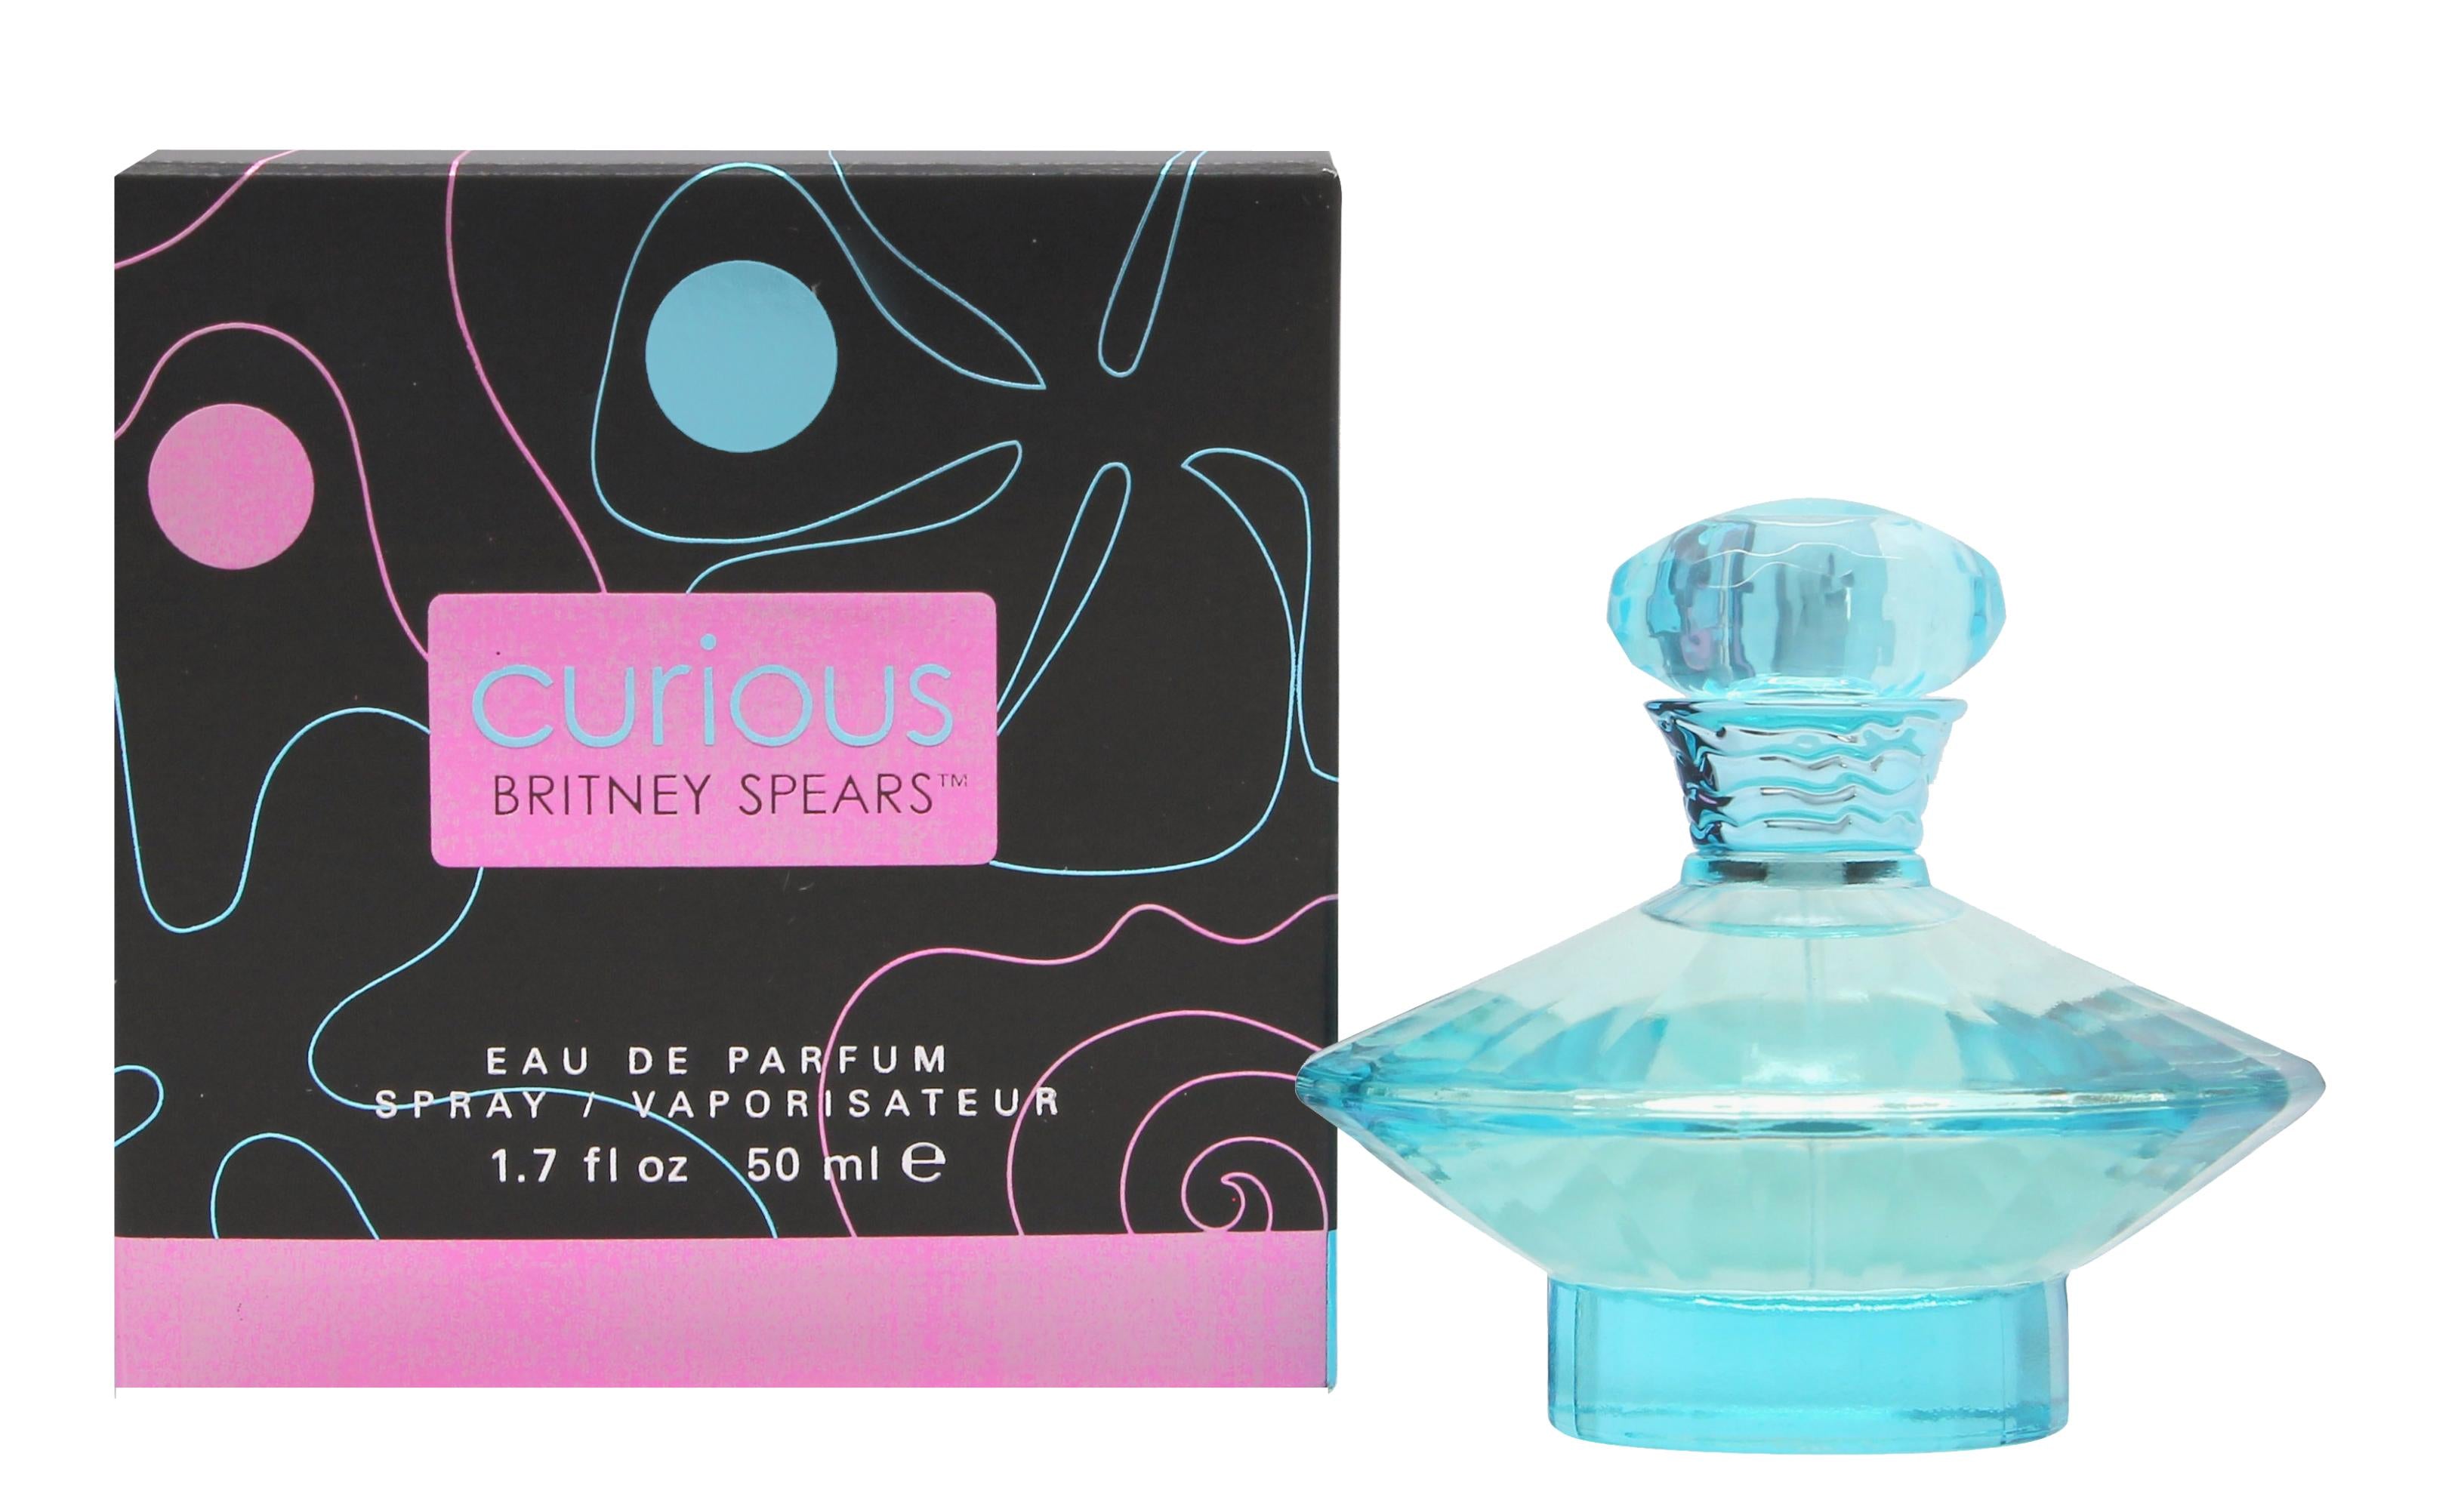 View Britney Spears Curious Eau de Parfum 50ml Spray information